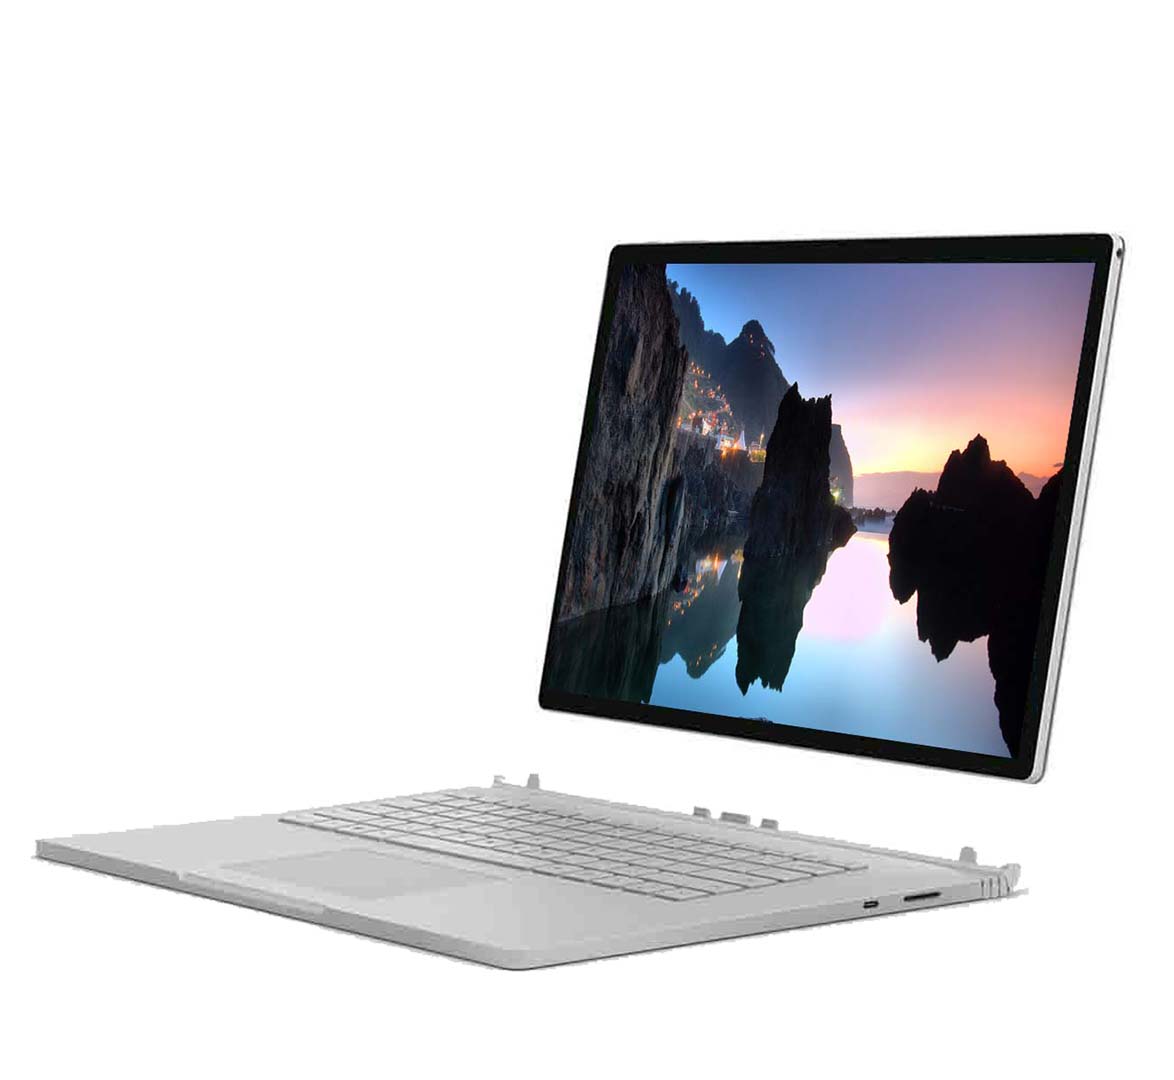 Microsoft Surface Book 2 Business Laptop, Intel Core i5-7th Gen CPU, 8GB RAM, 256GB SSD, 13.5 inch Touchscreen, Windows 10 Pro, Refurbished Laptop